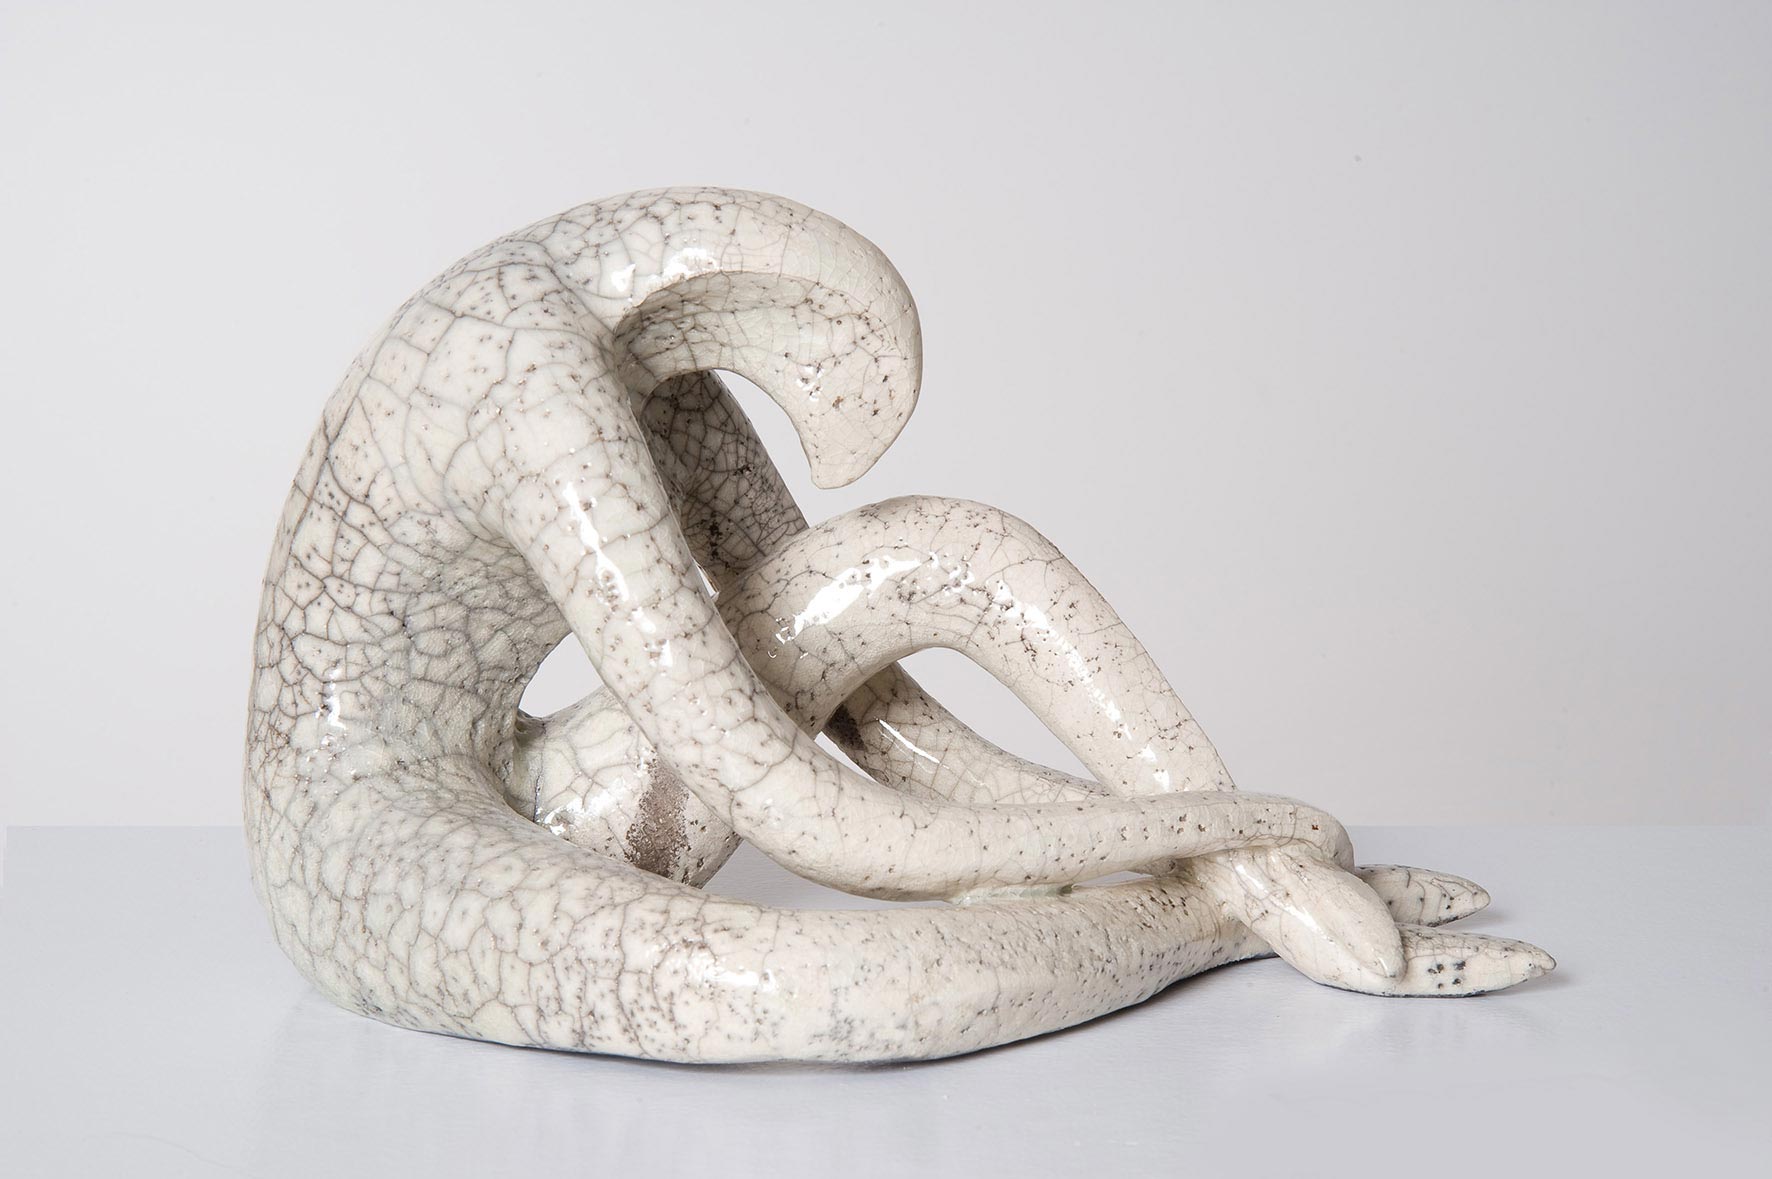 Schlangenmensch, Keramik (Raku), 18/30/18 cm